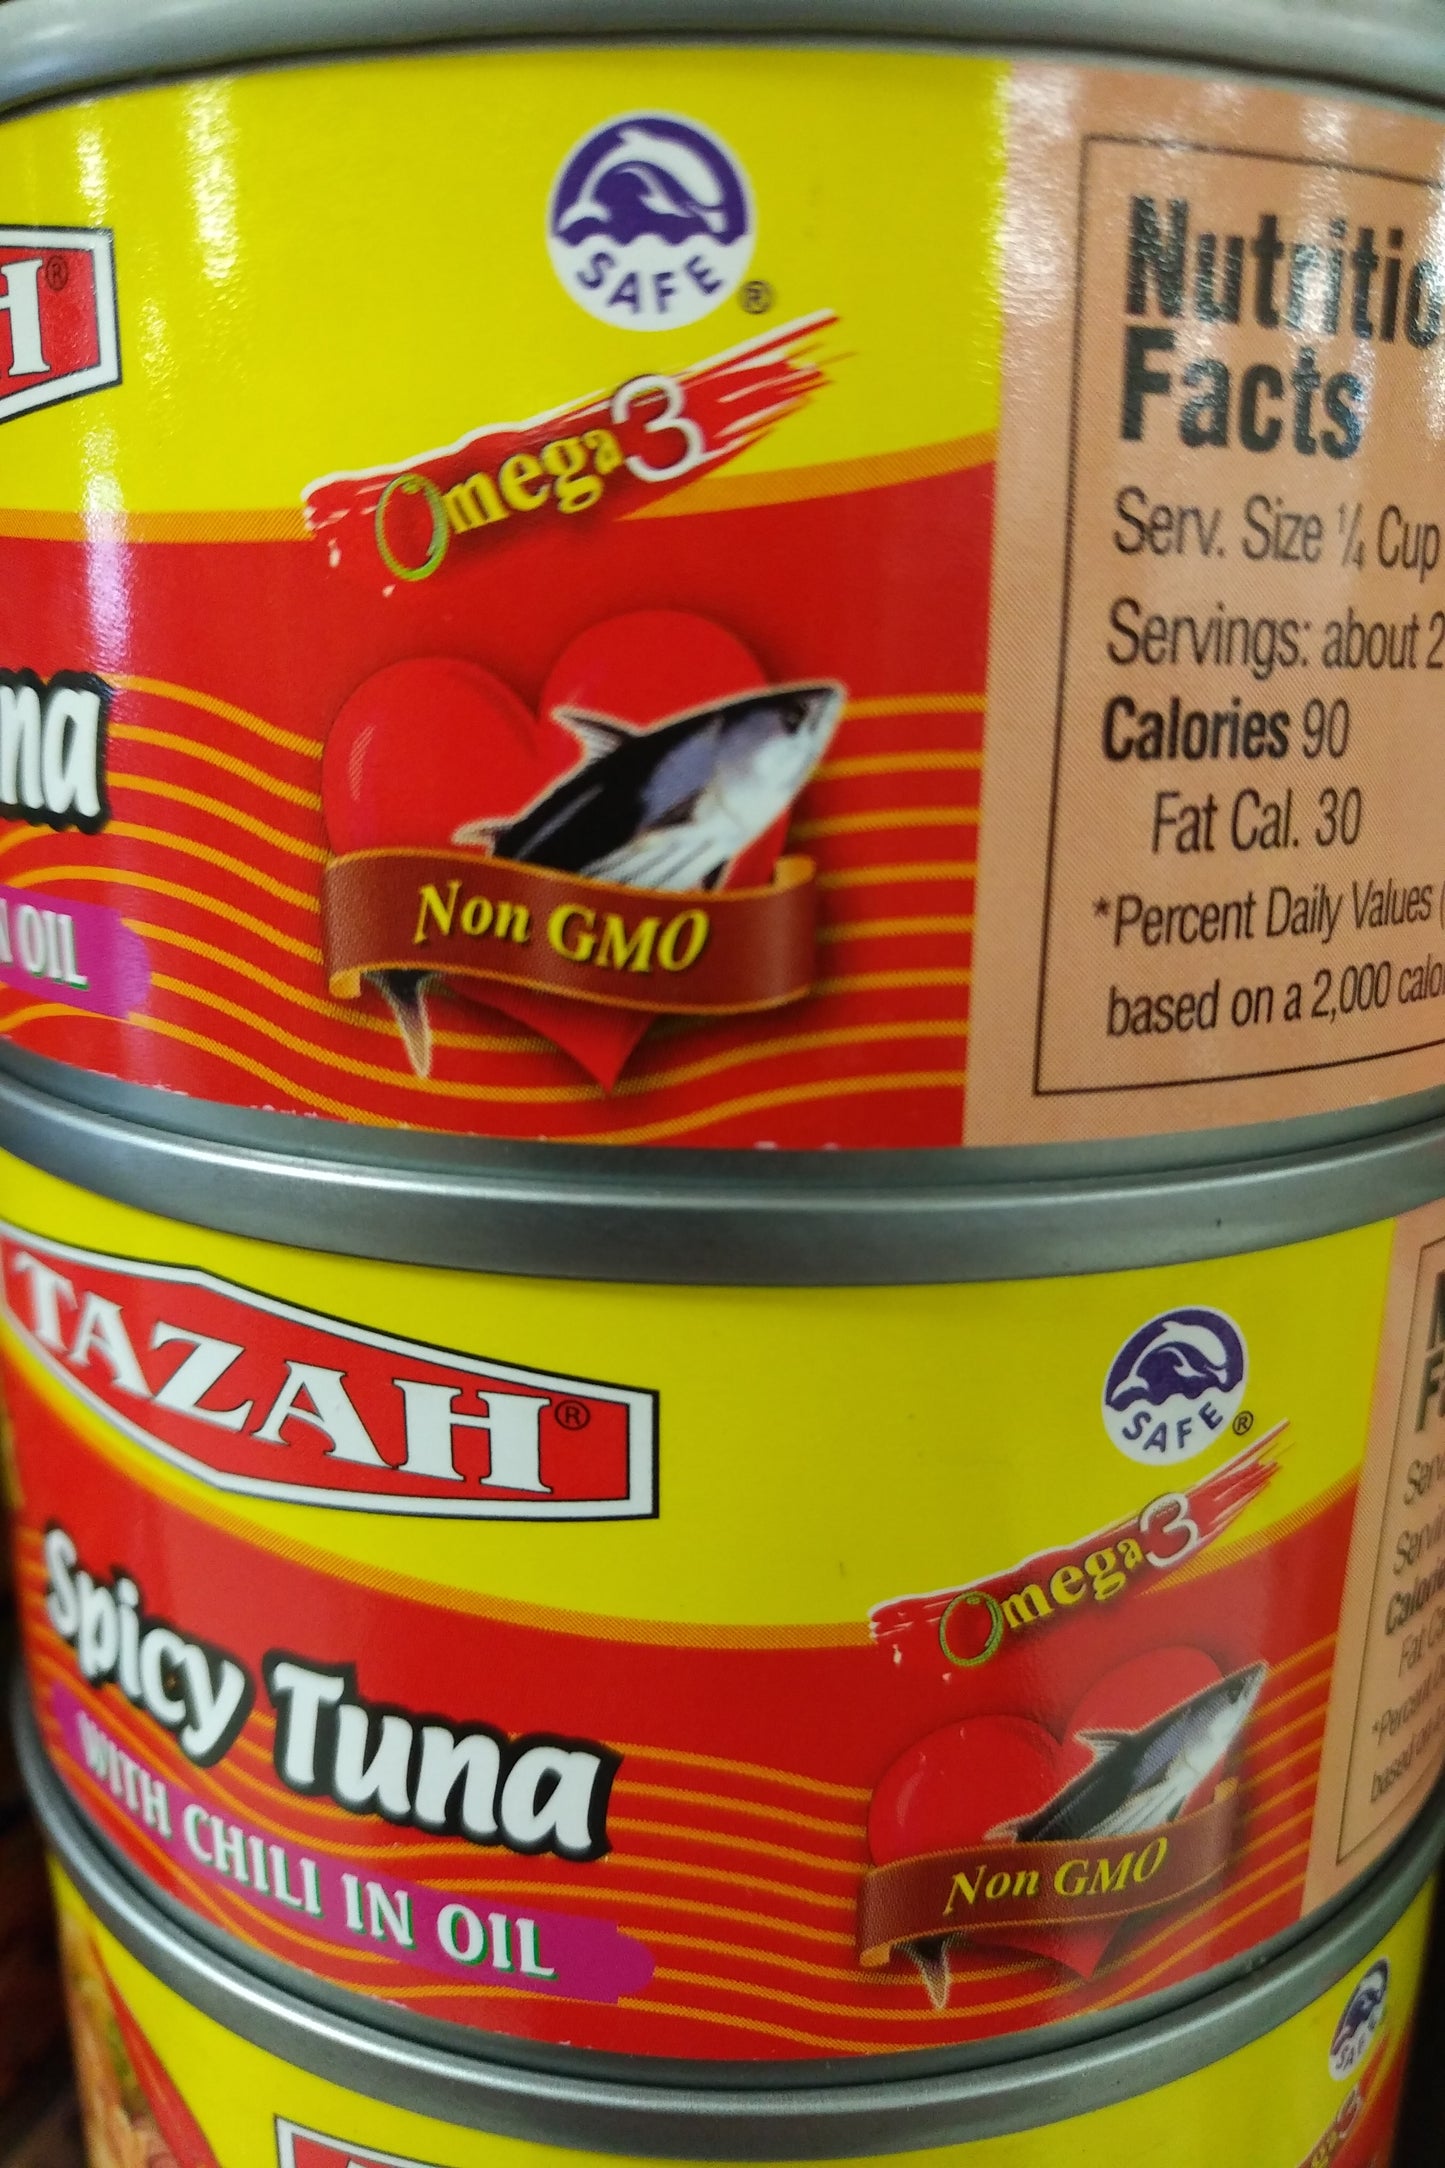 Tazah Spicy Tuna With Chili in Oil 6oz